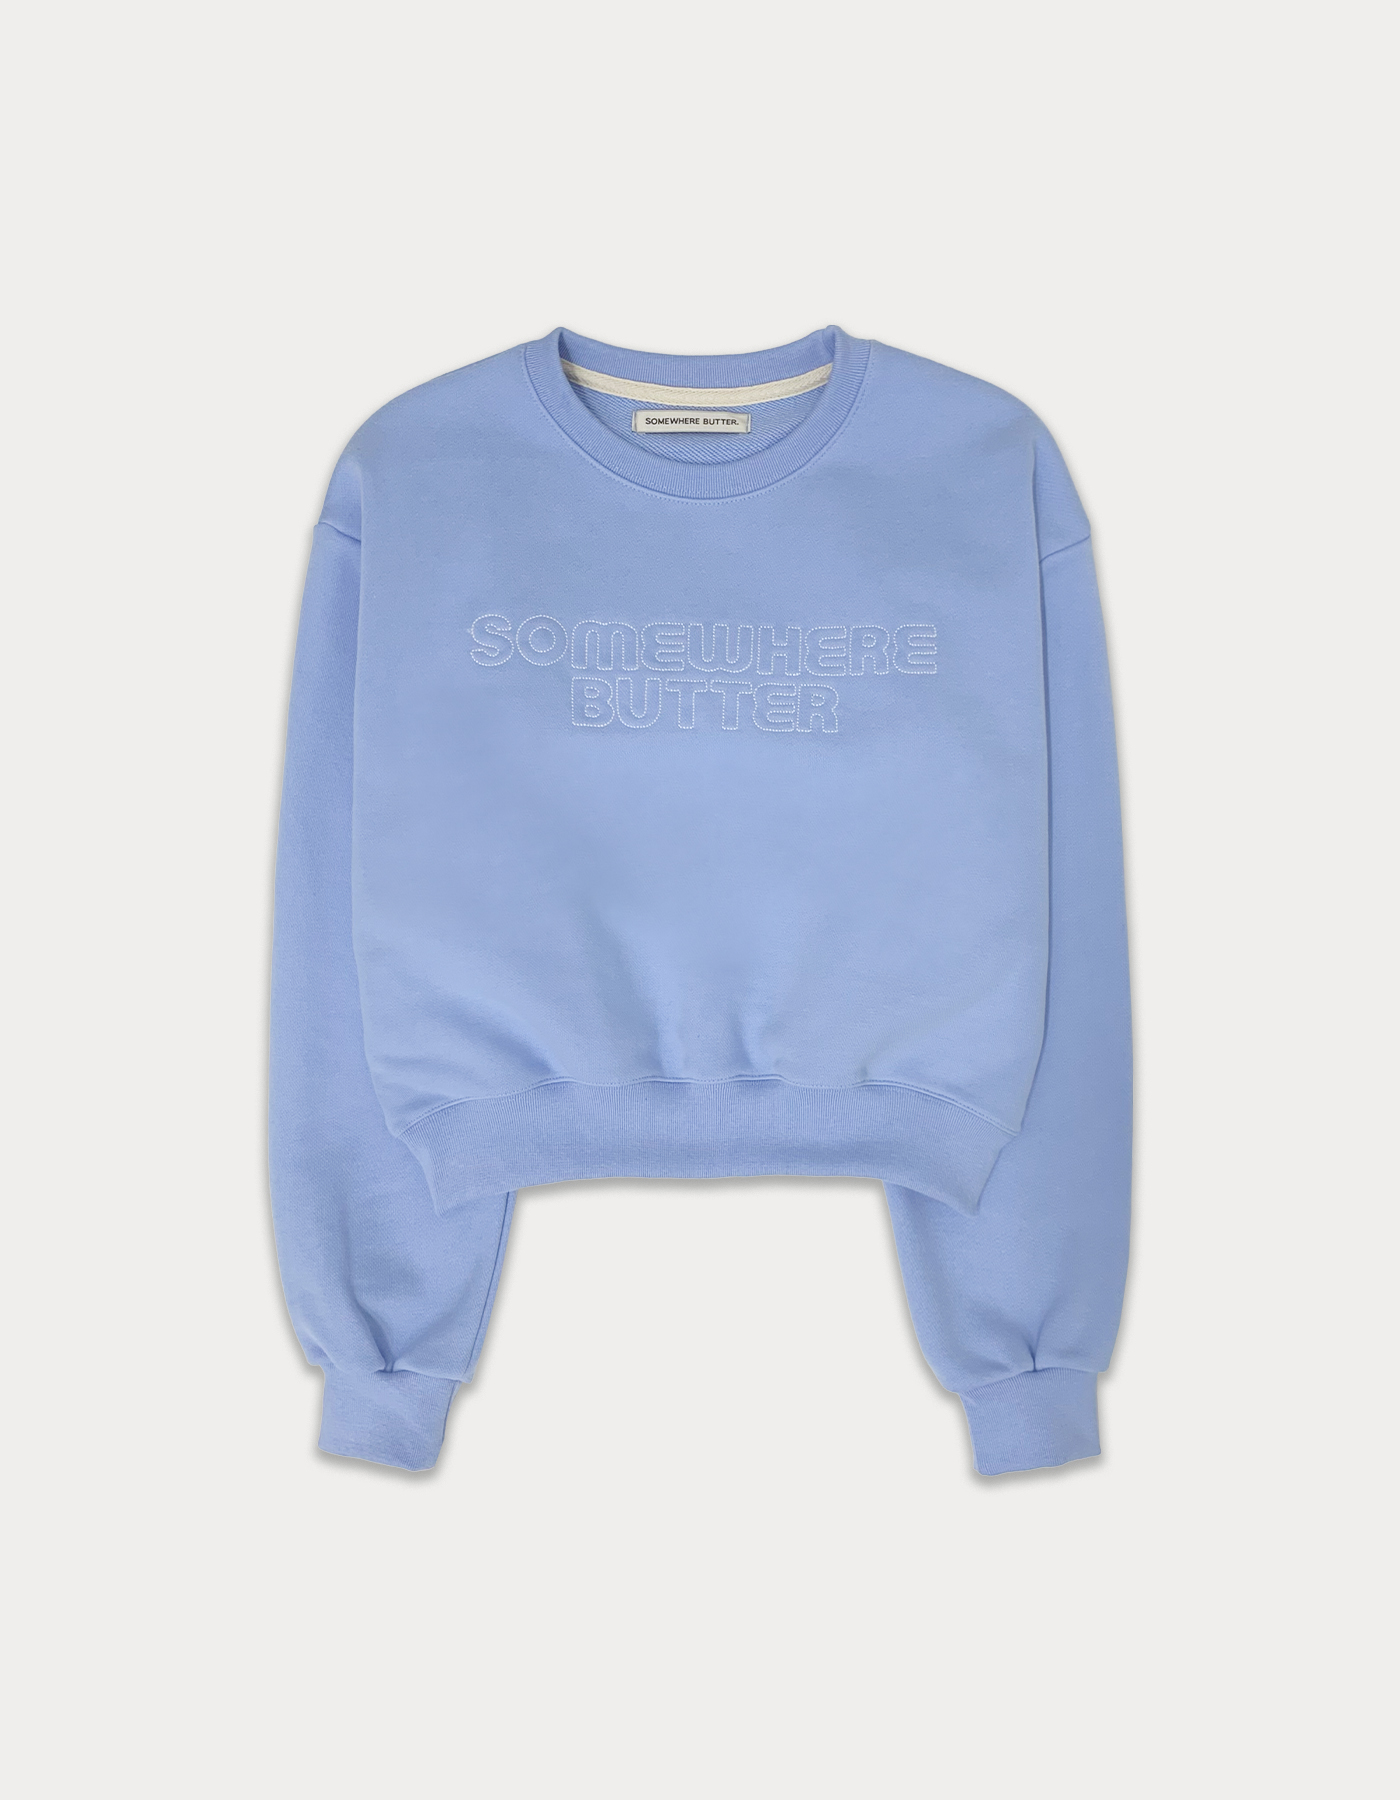 Dotted line logo sweatshirt - light blue